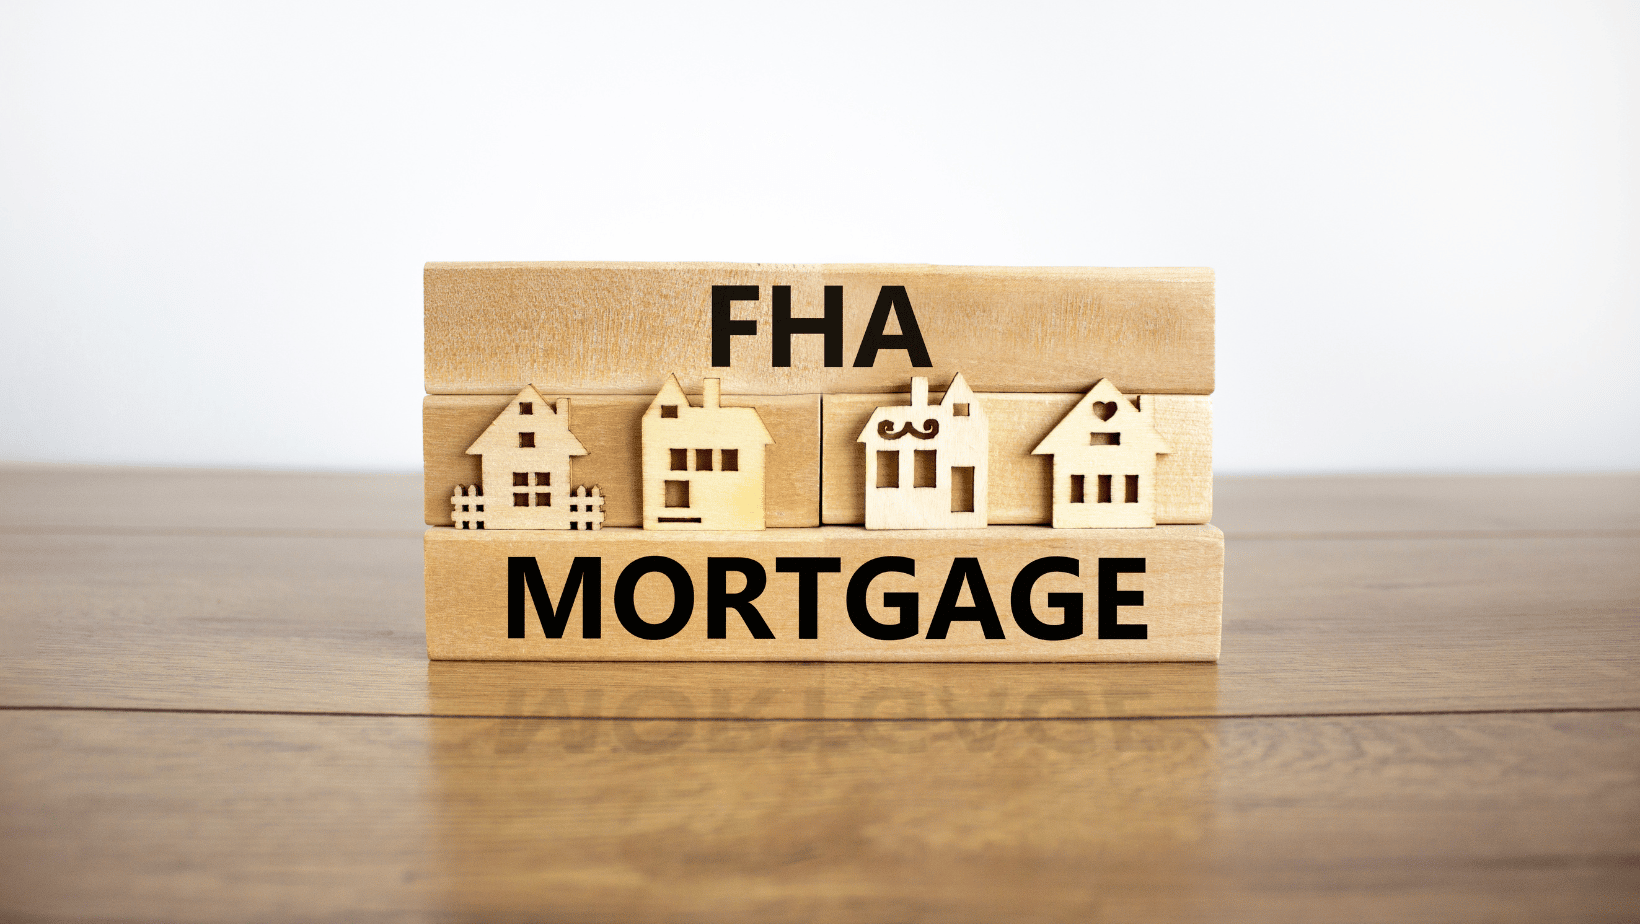 FHA mortgage lenders in houston